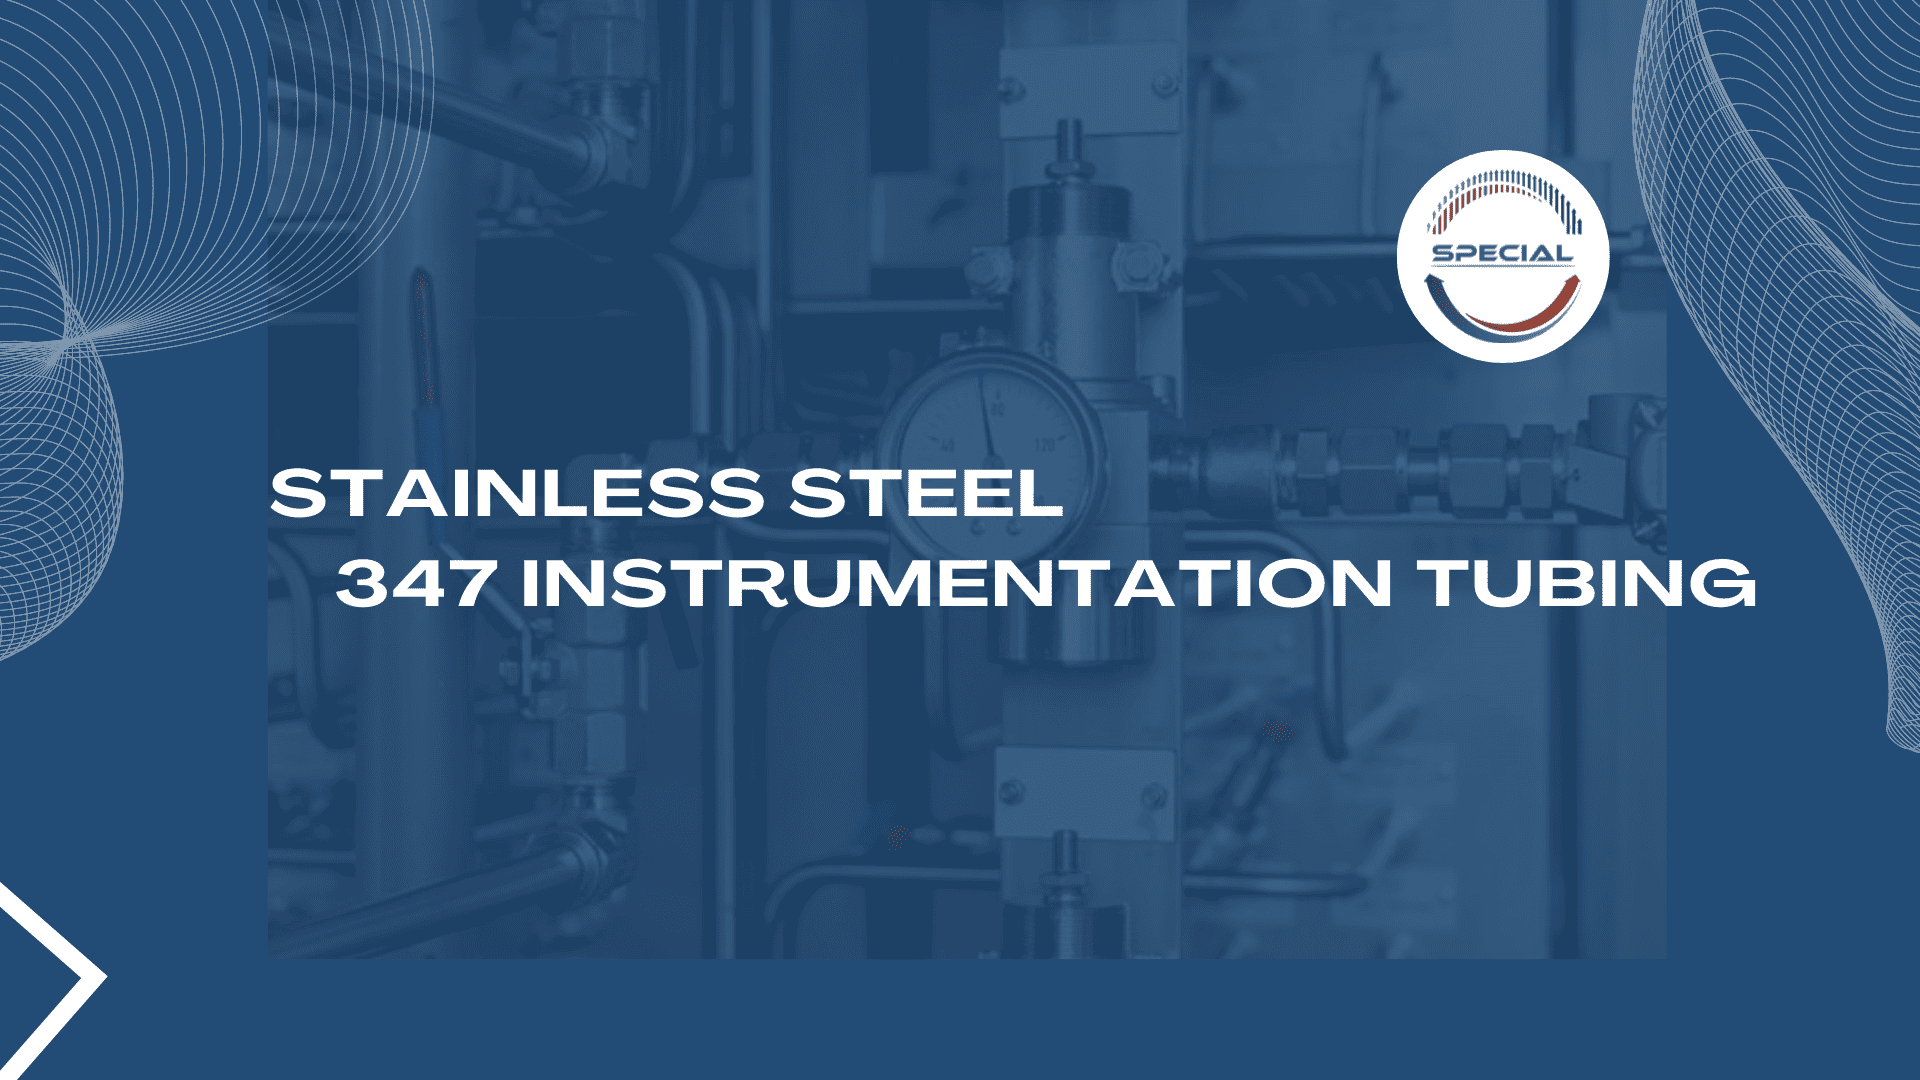 Stainless steel 347 instrumentation tubing